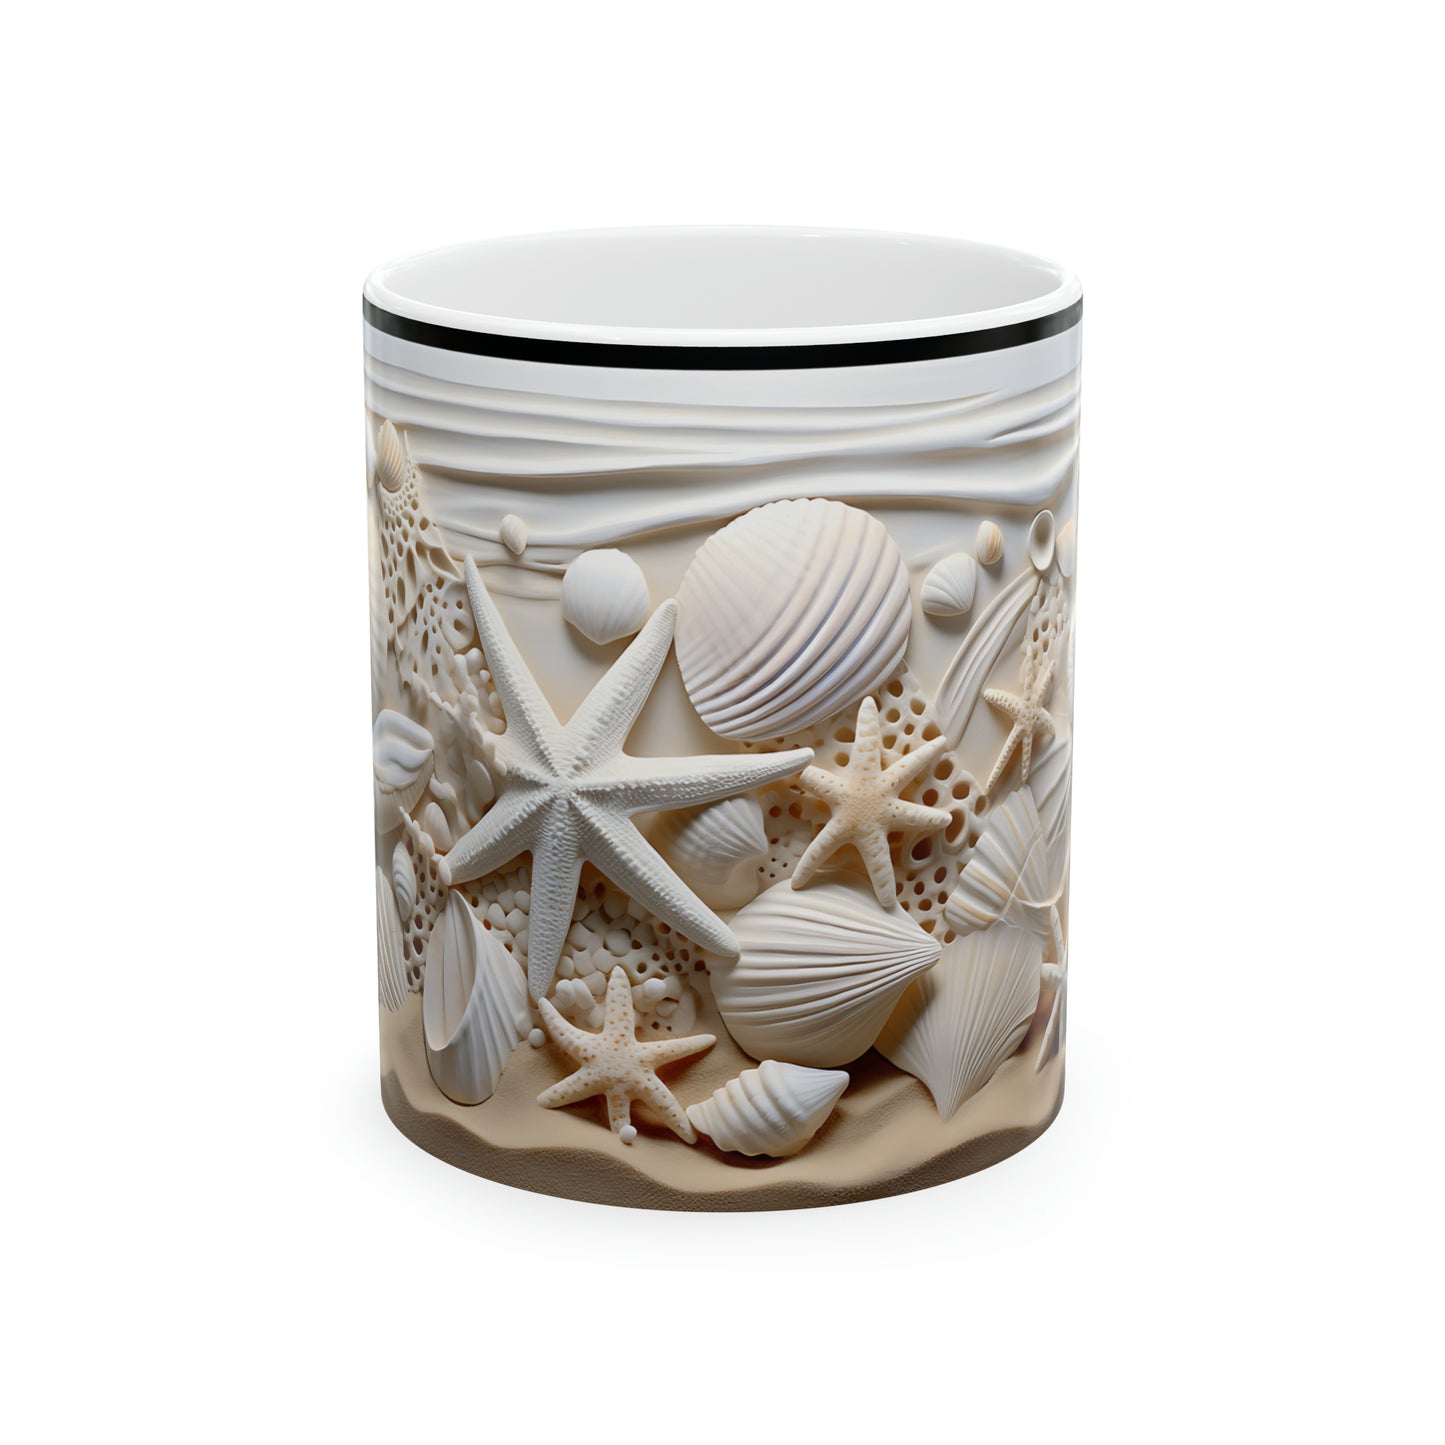 Seashell Ceramic Mug, 11 oz